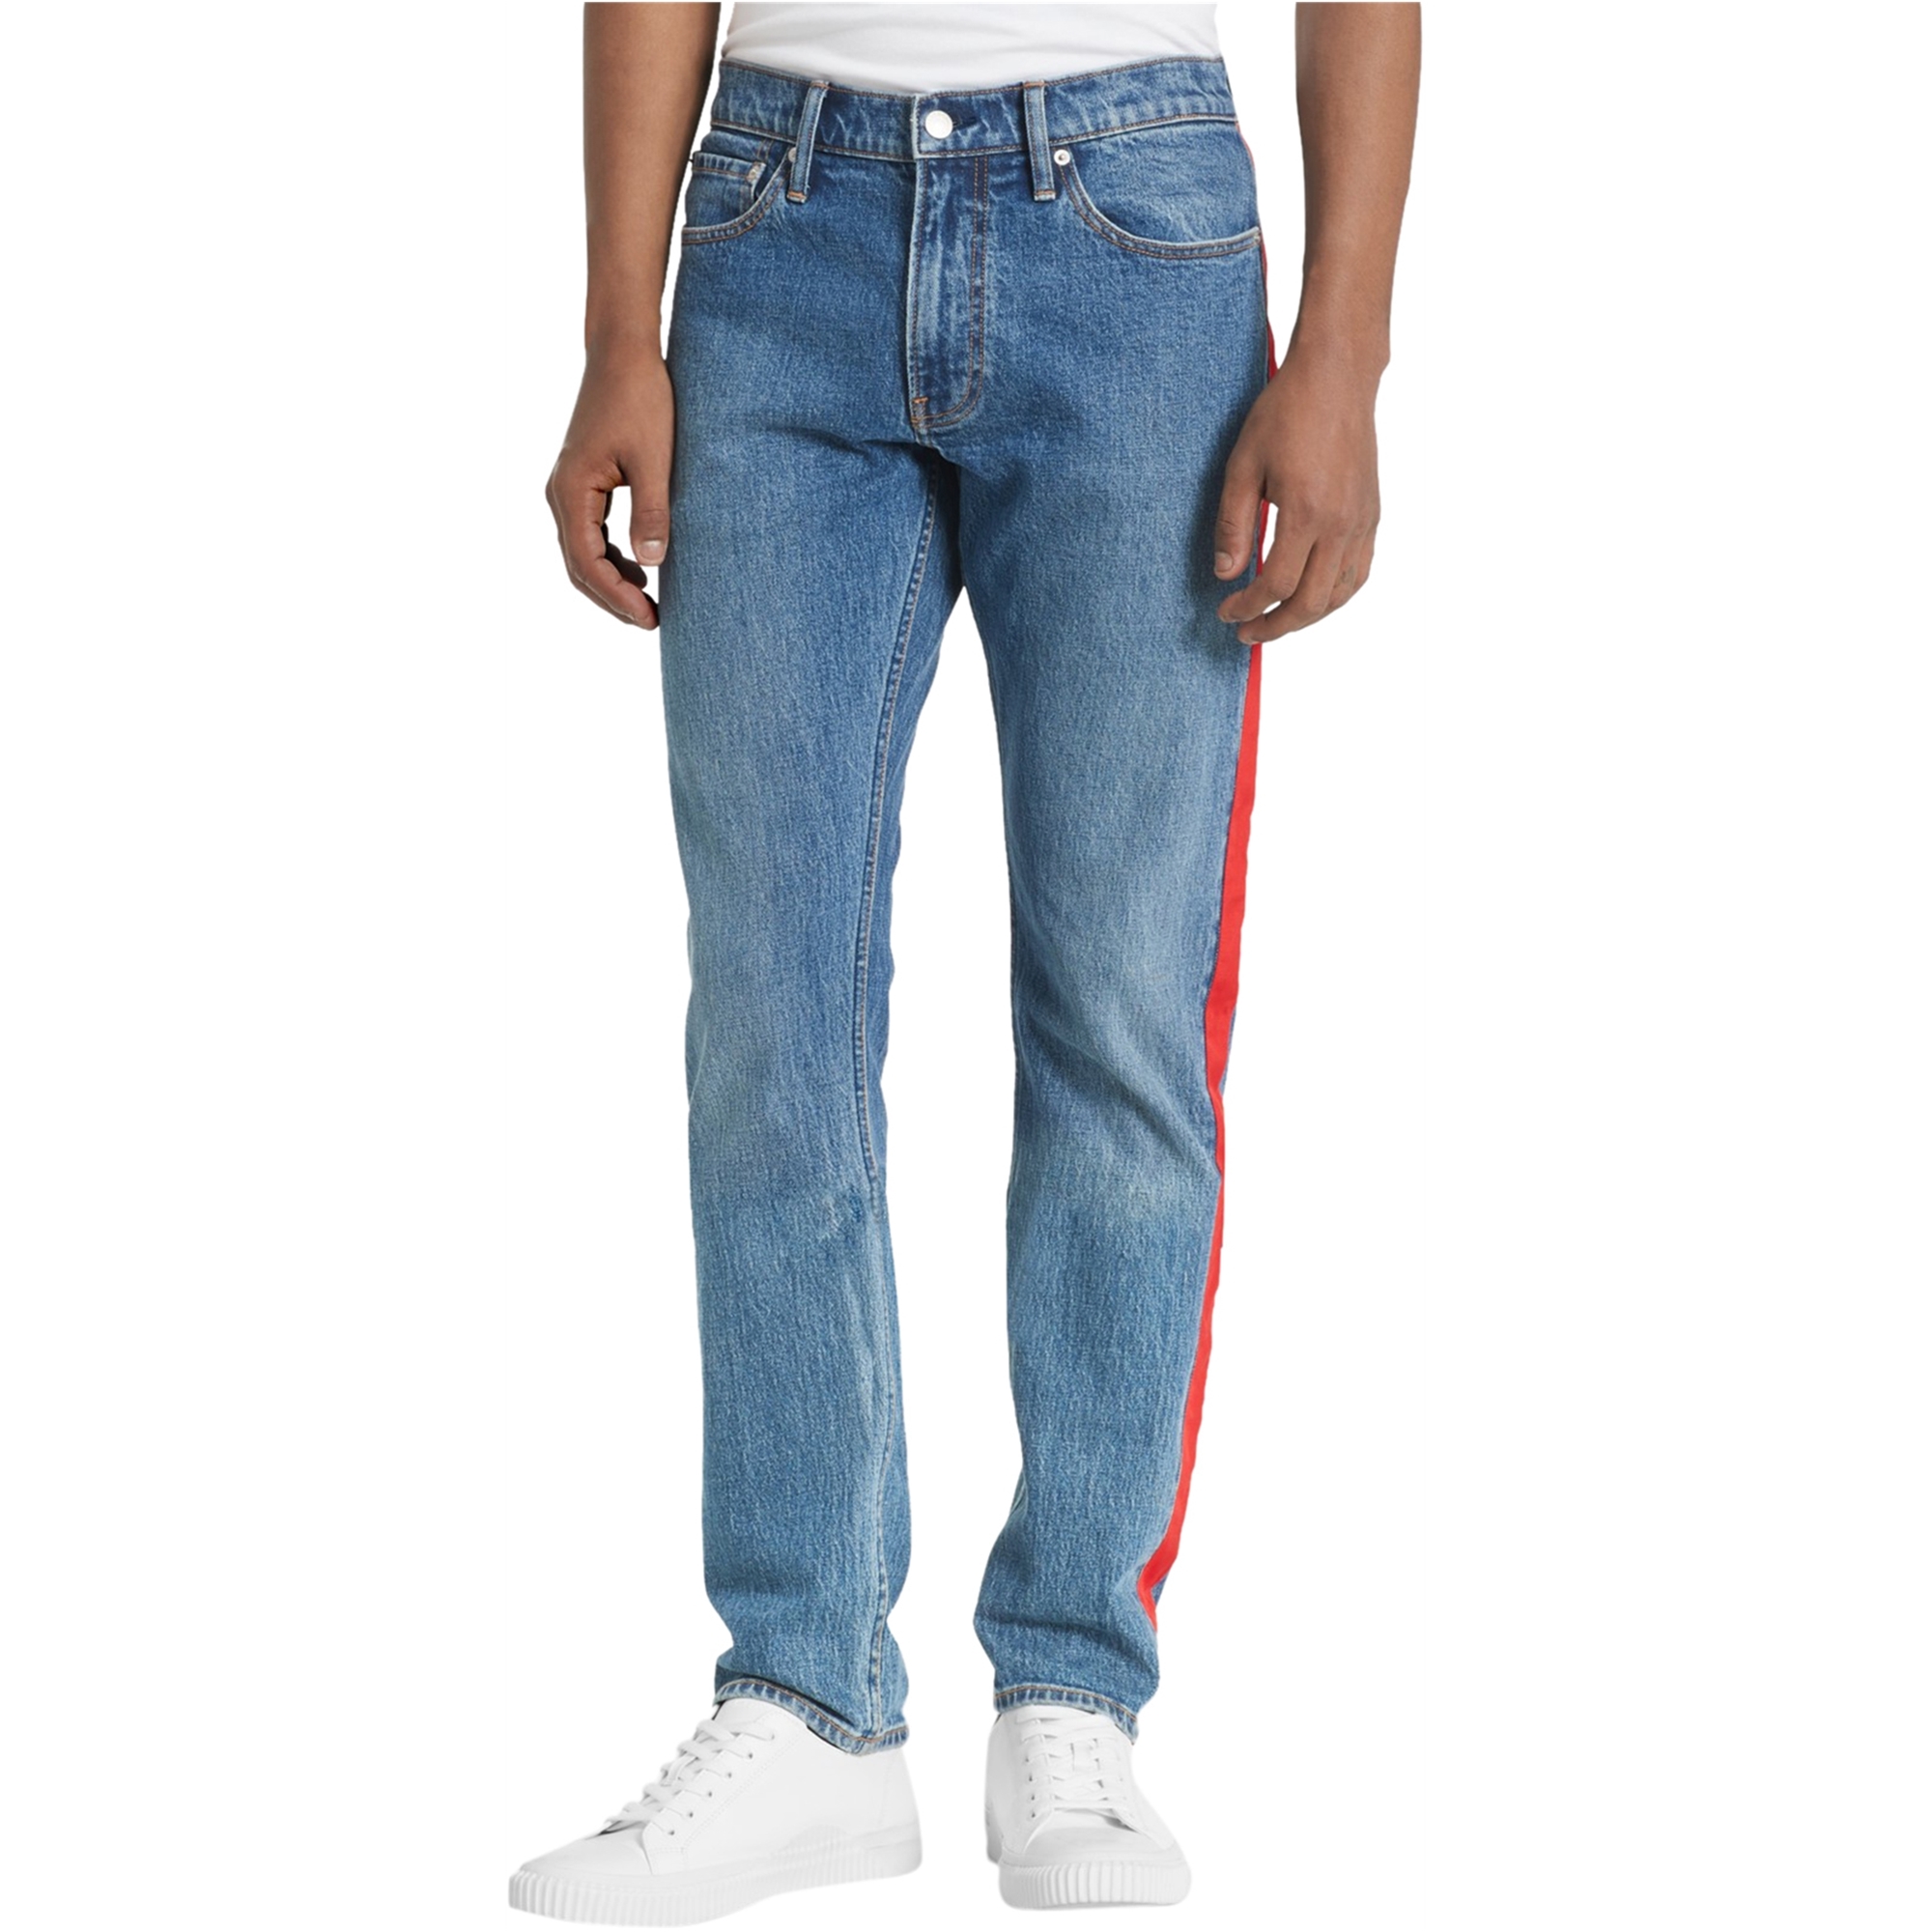 Calvin Klein Mens Side Stripe Slim Fit Jeans, Blue, 34W x 32L - image 1 of 4